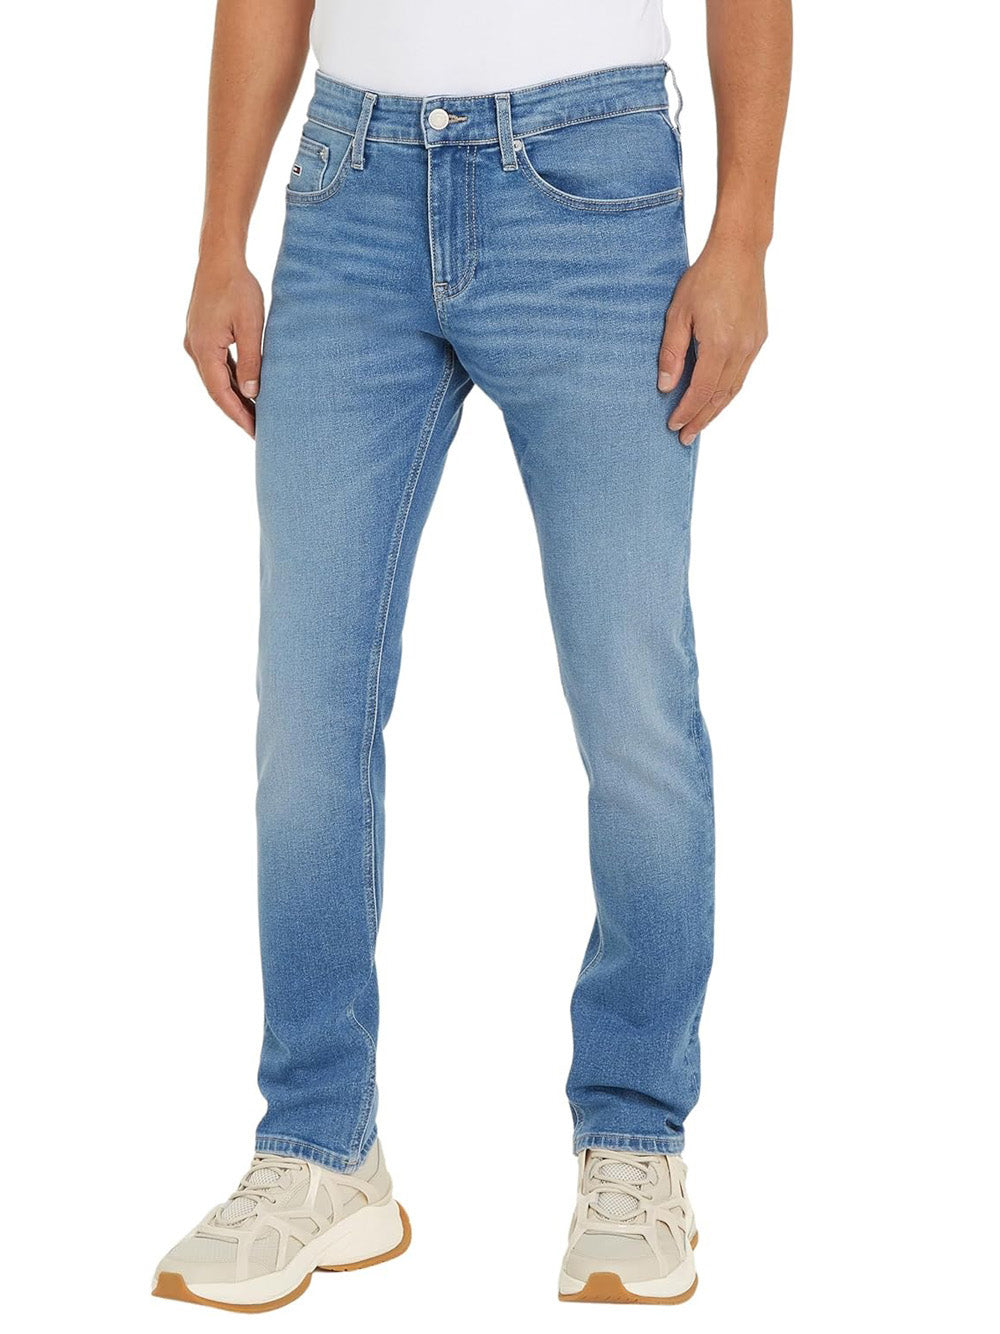 TOMMY HILFIGER Jeans Uomo - Blu modello DM0DM18722